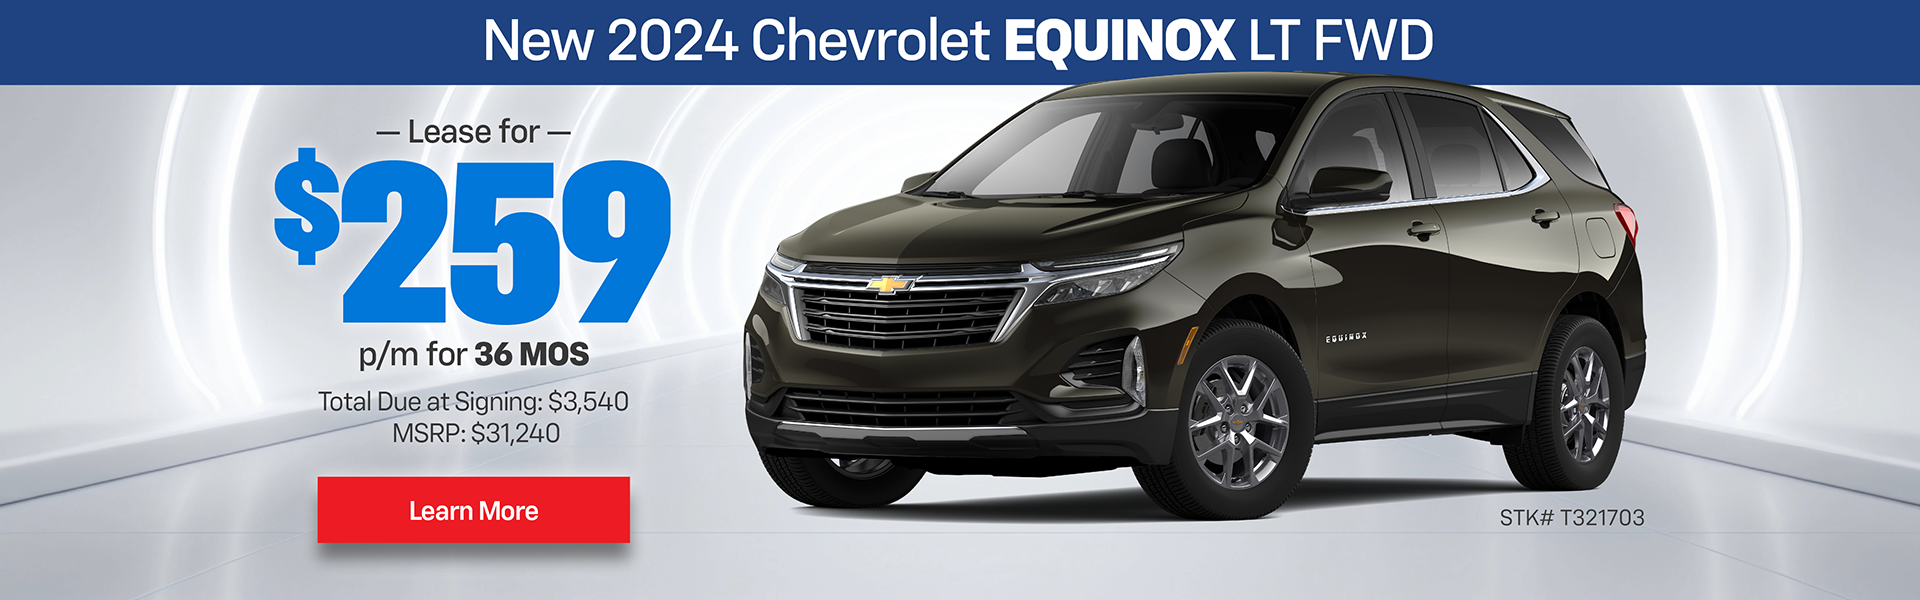 New 2024 Chevrolet Equinox LT